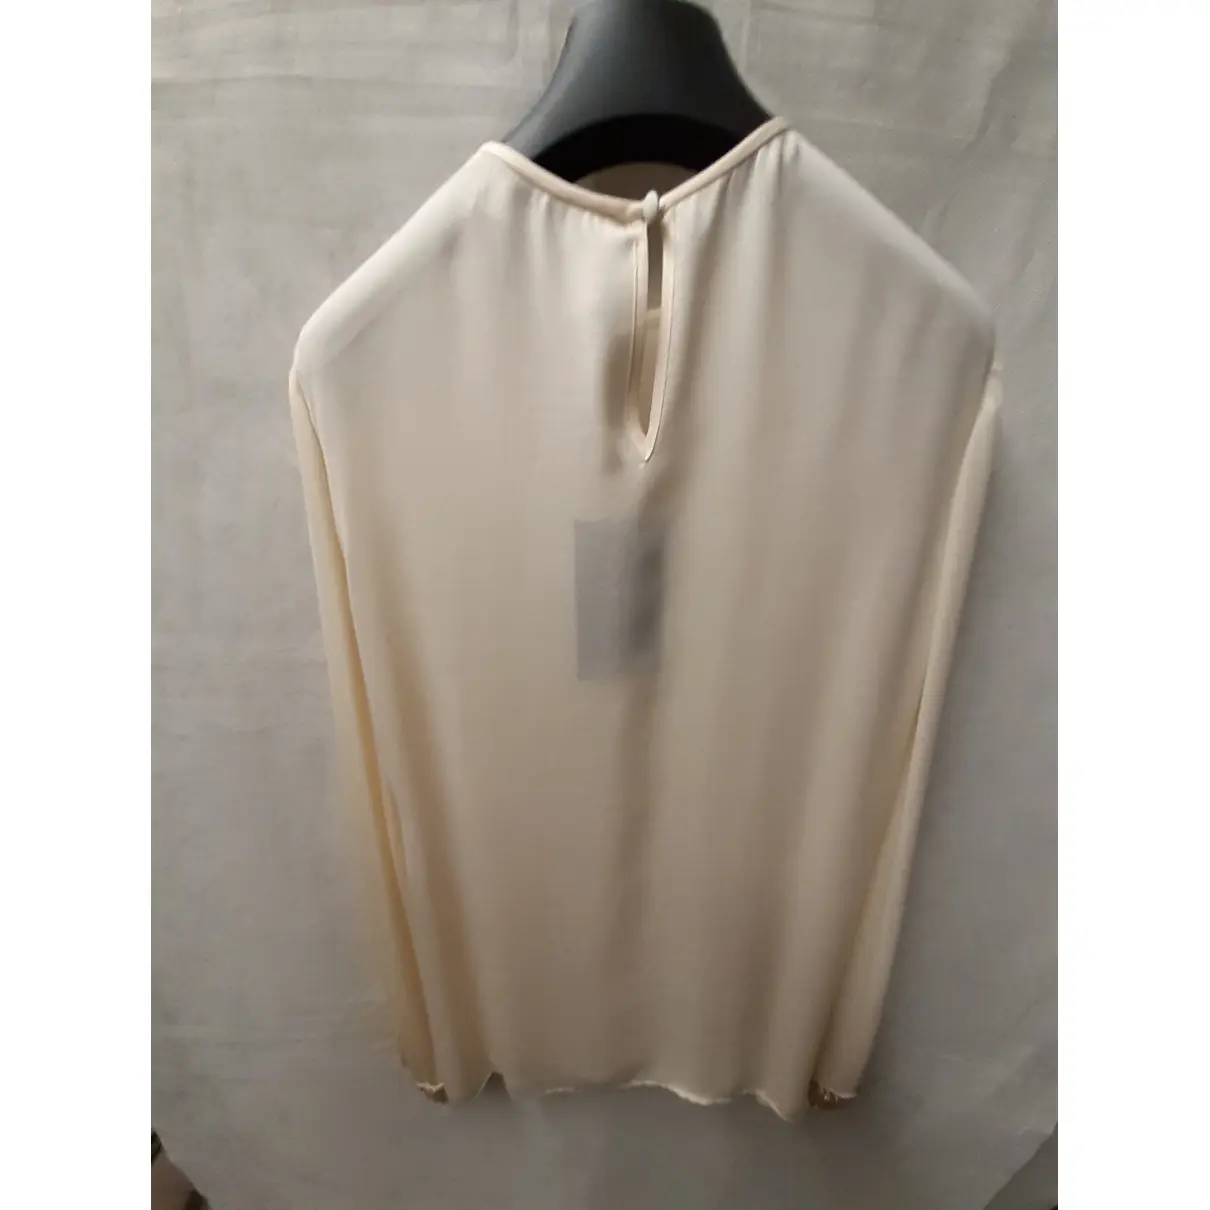 Buy Dsquared2 Silk shirt online